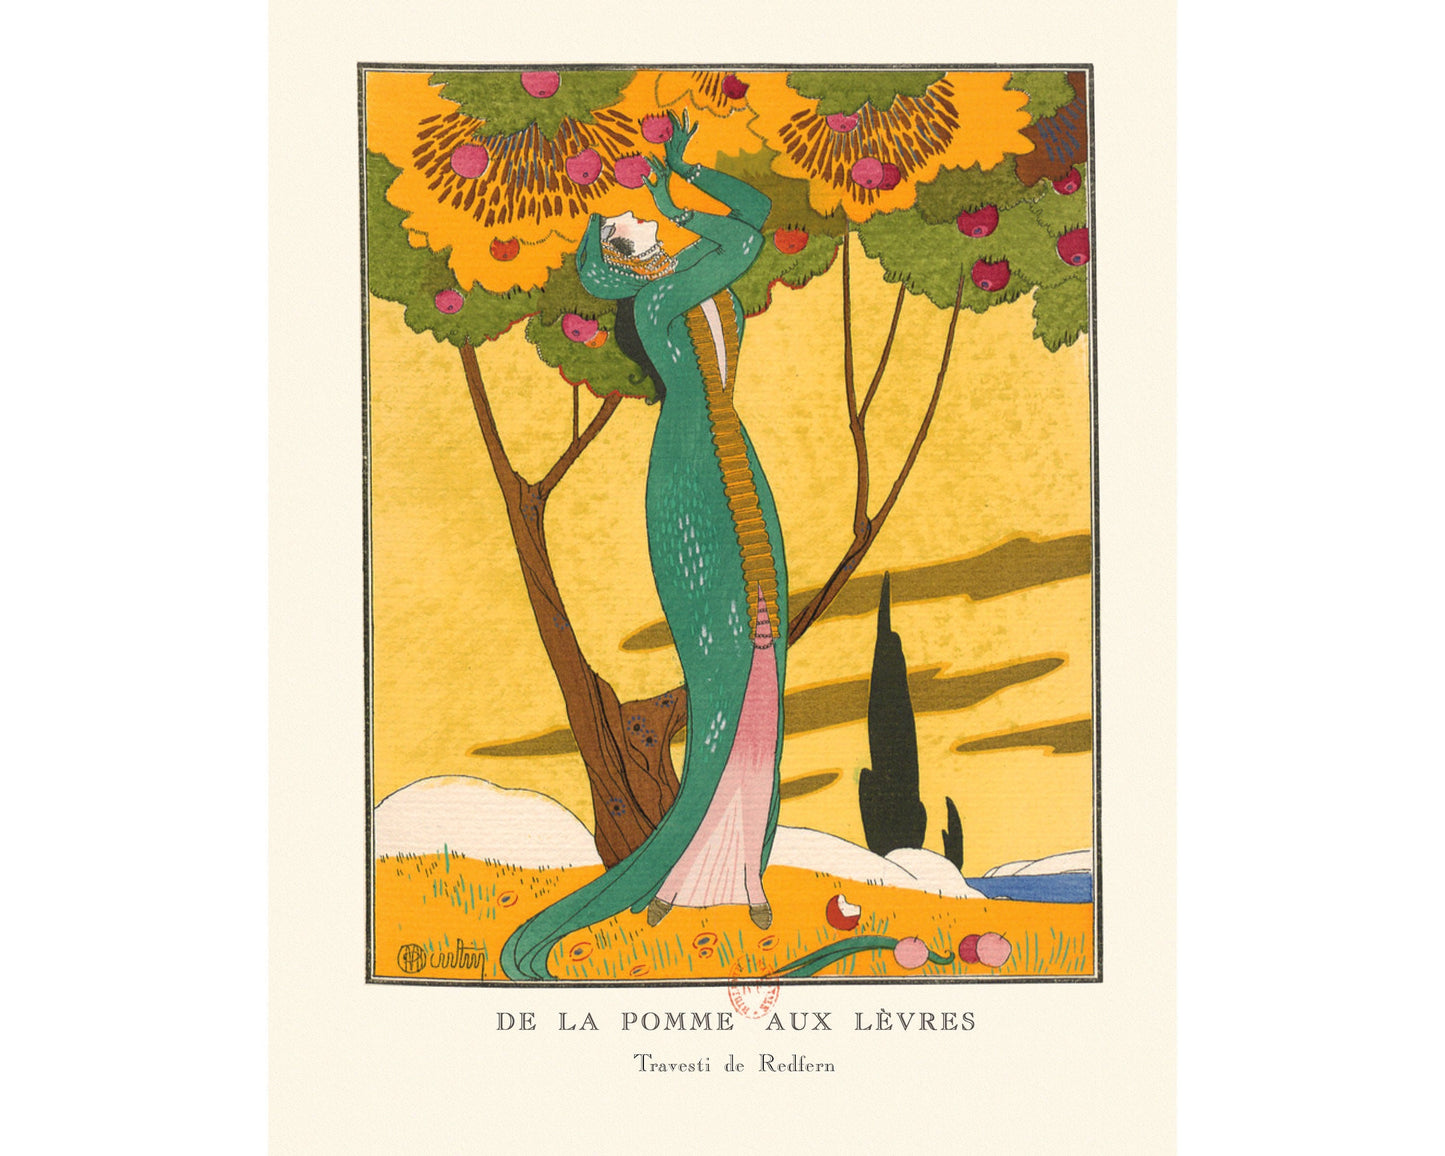 Vintage French fashion | Woman picking apples | 1920's fashion plate | Art deco style art | Giclée fine art print | Eco-friendly gift